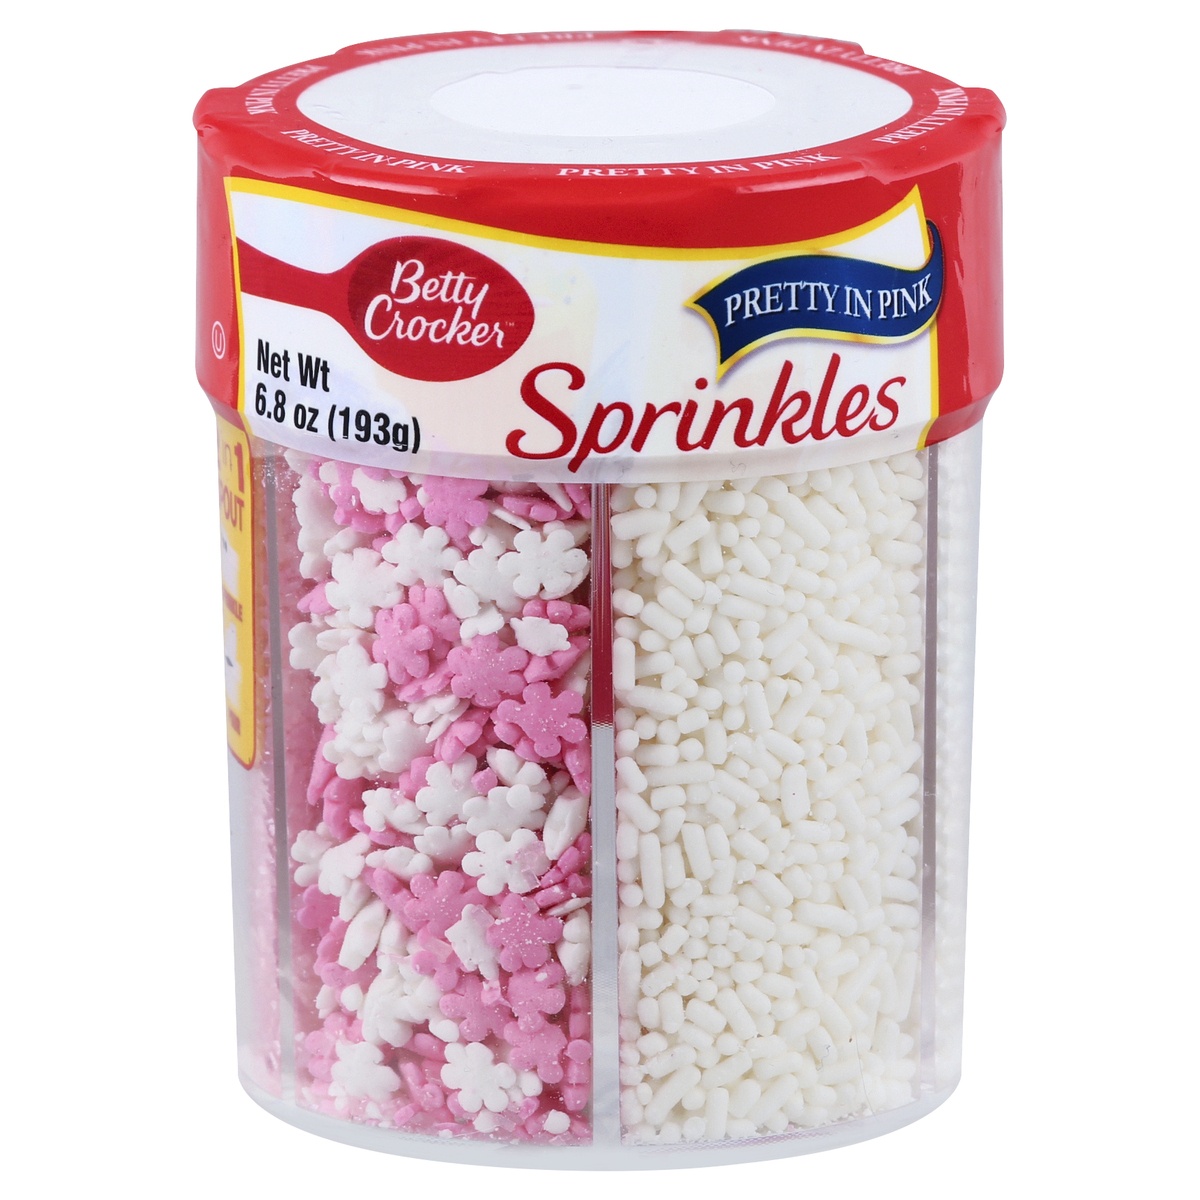 slide 1 of 1, Betty Crocker Sprinkles, Pretty in Pink, 6.8 oz